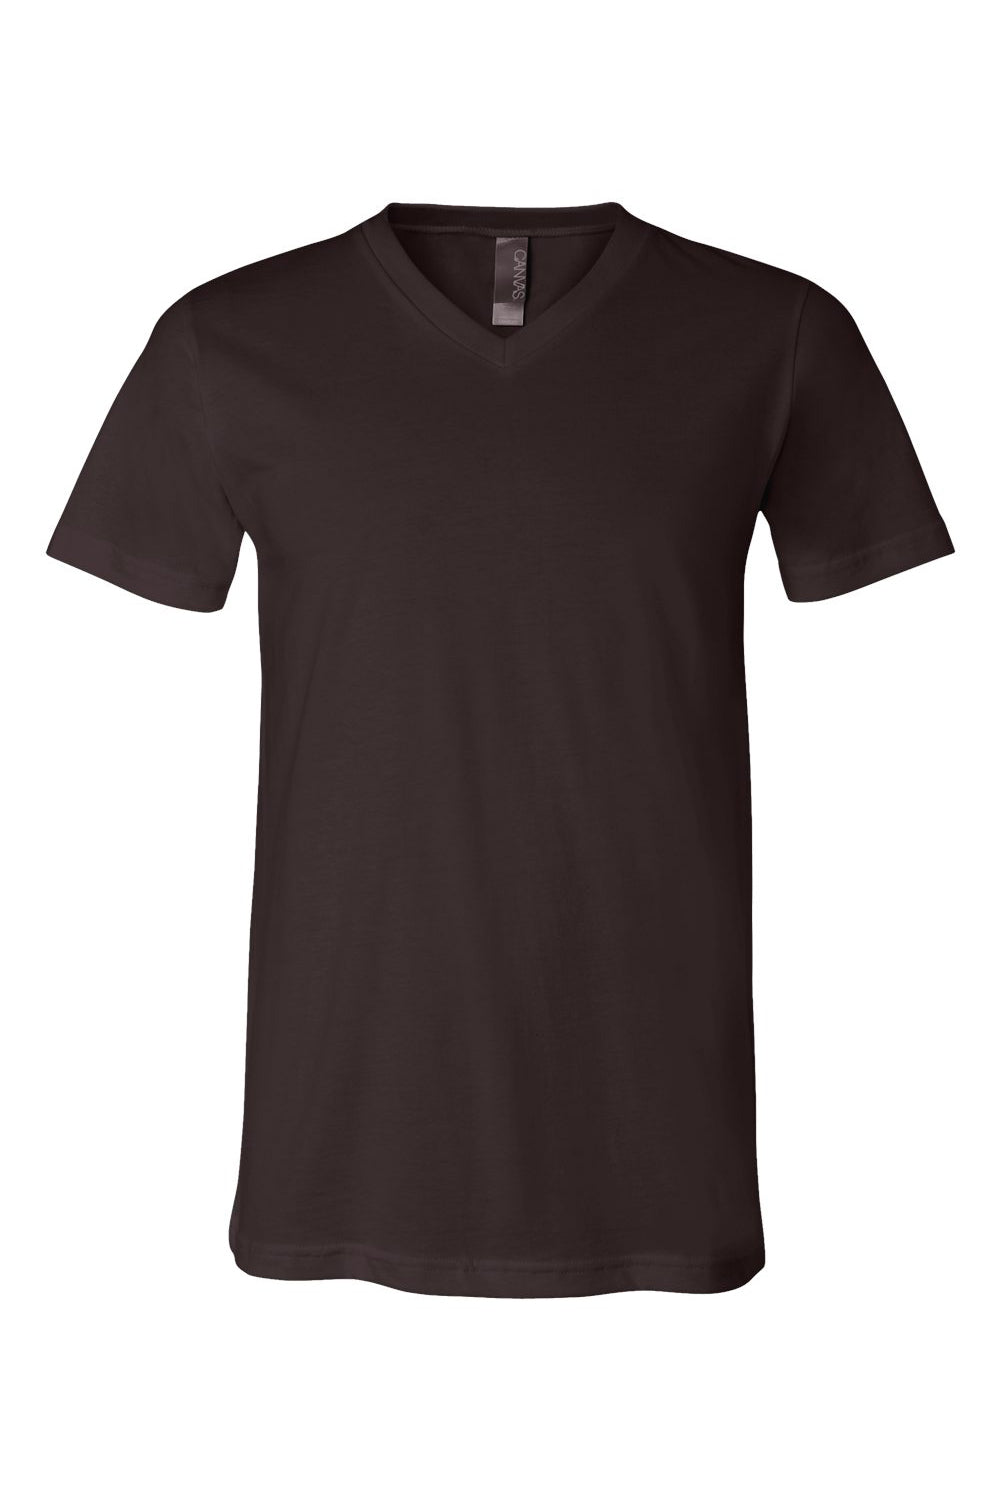 Bella + Canvas BC3005/3005/3655C Mens Jersey Short Sleeve V-Neck T-Shirt Brown Flat Front